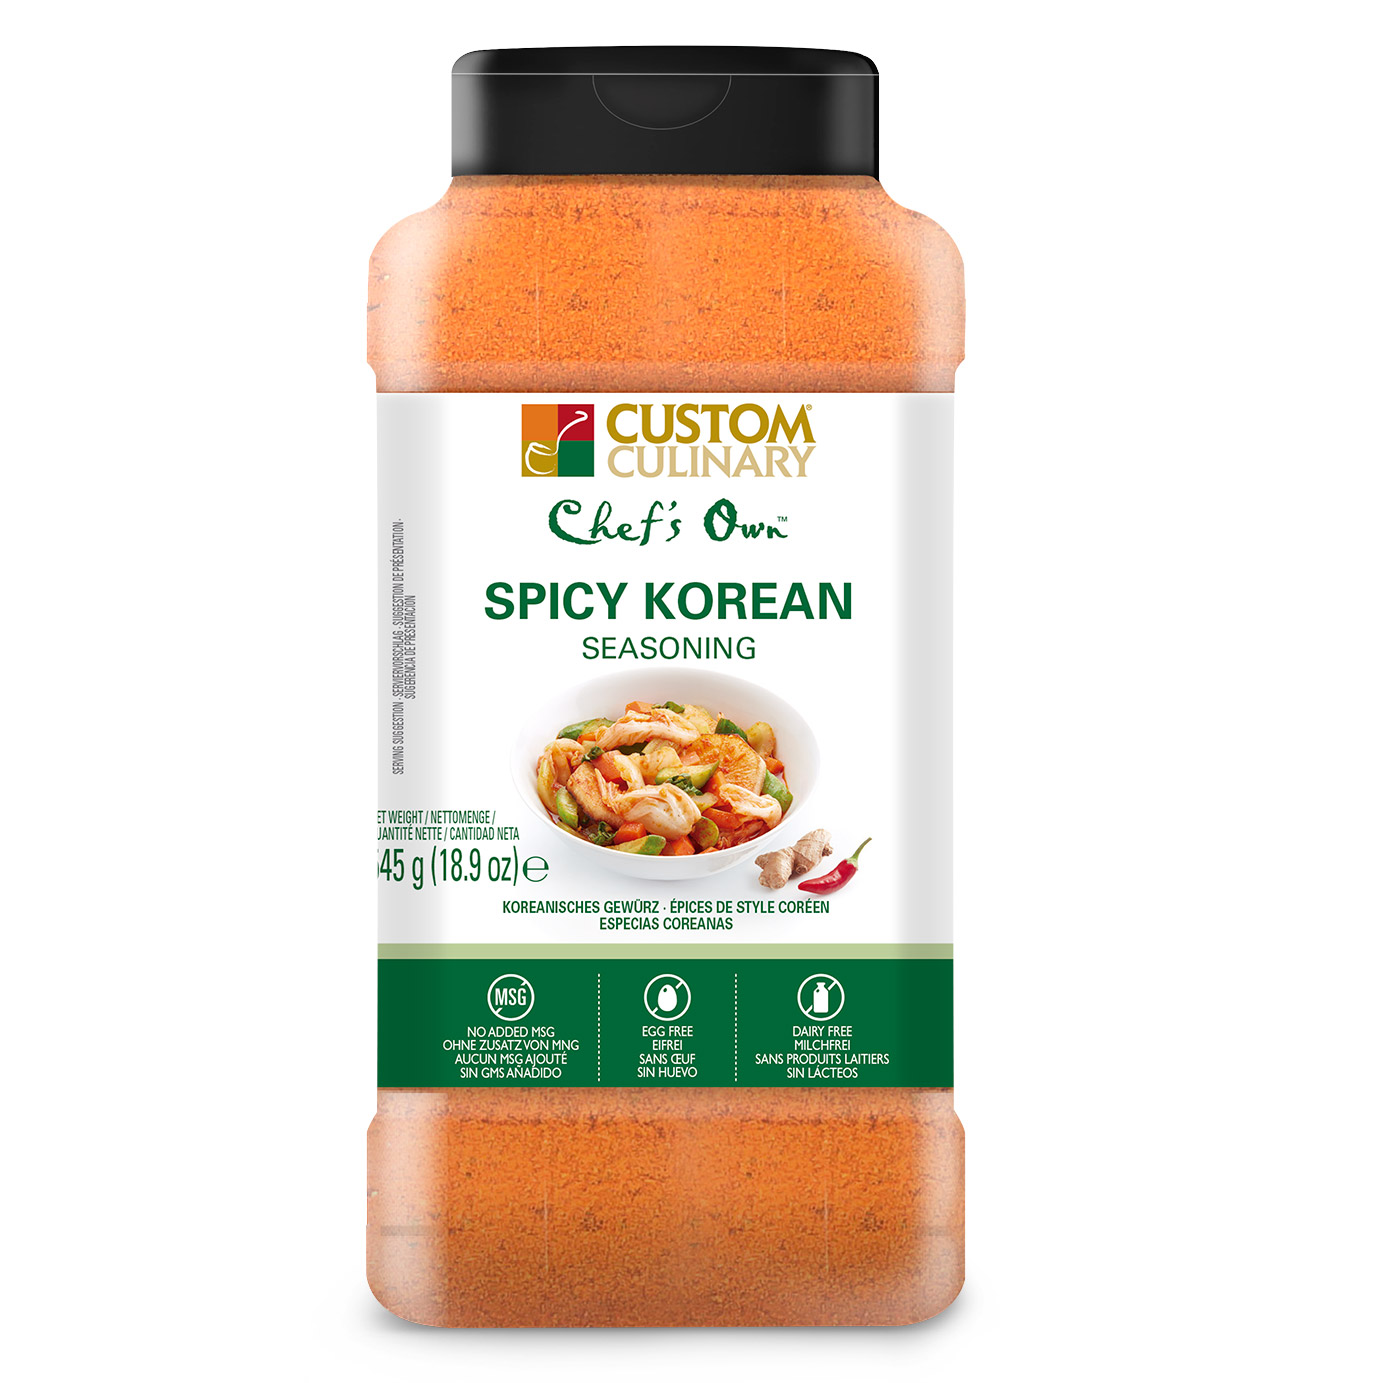 Spicy Korean